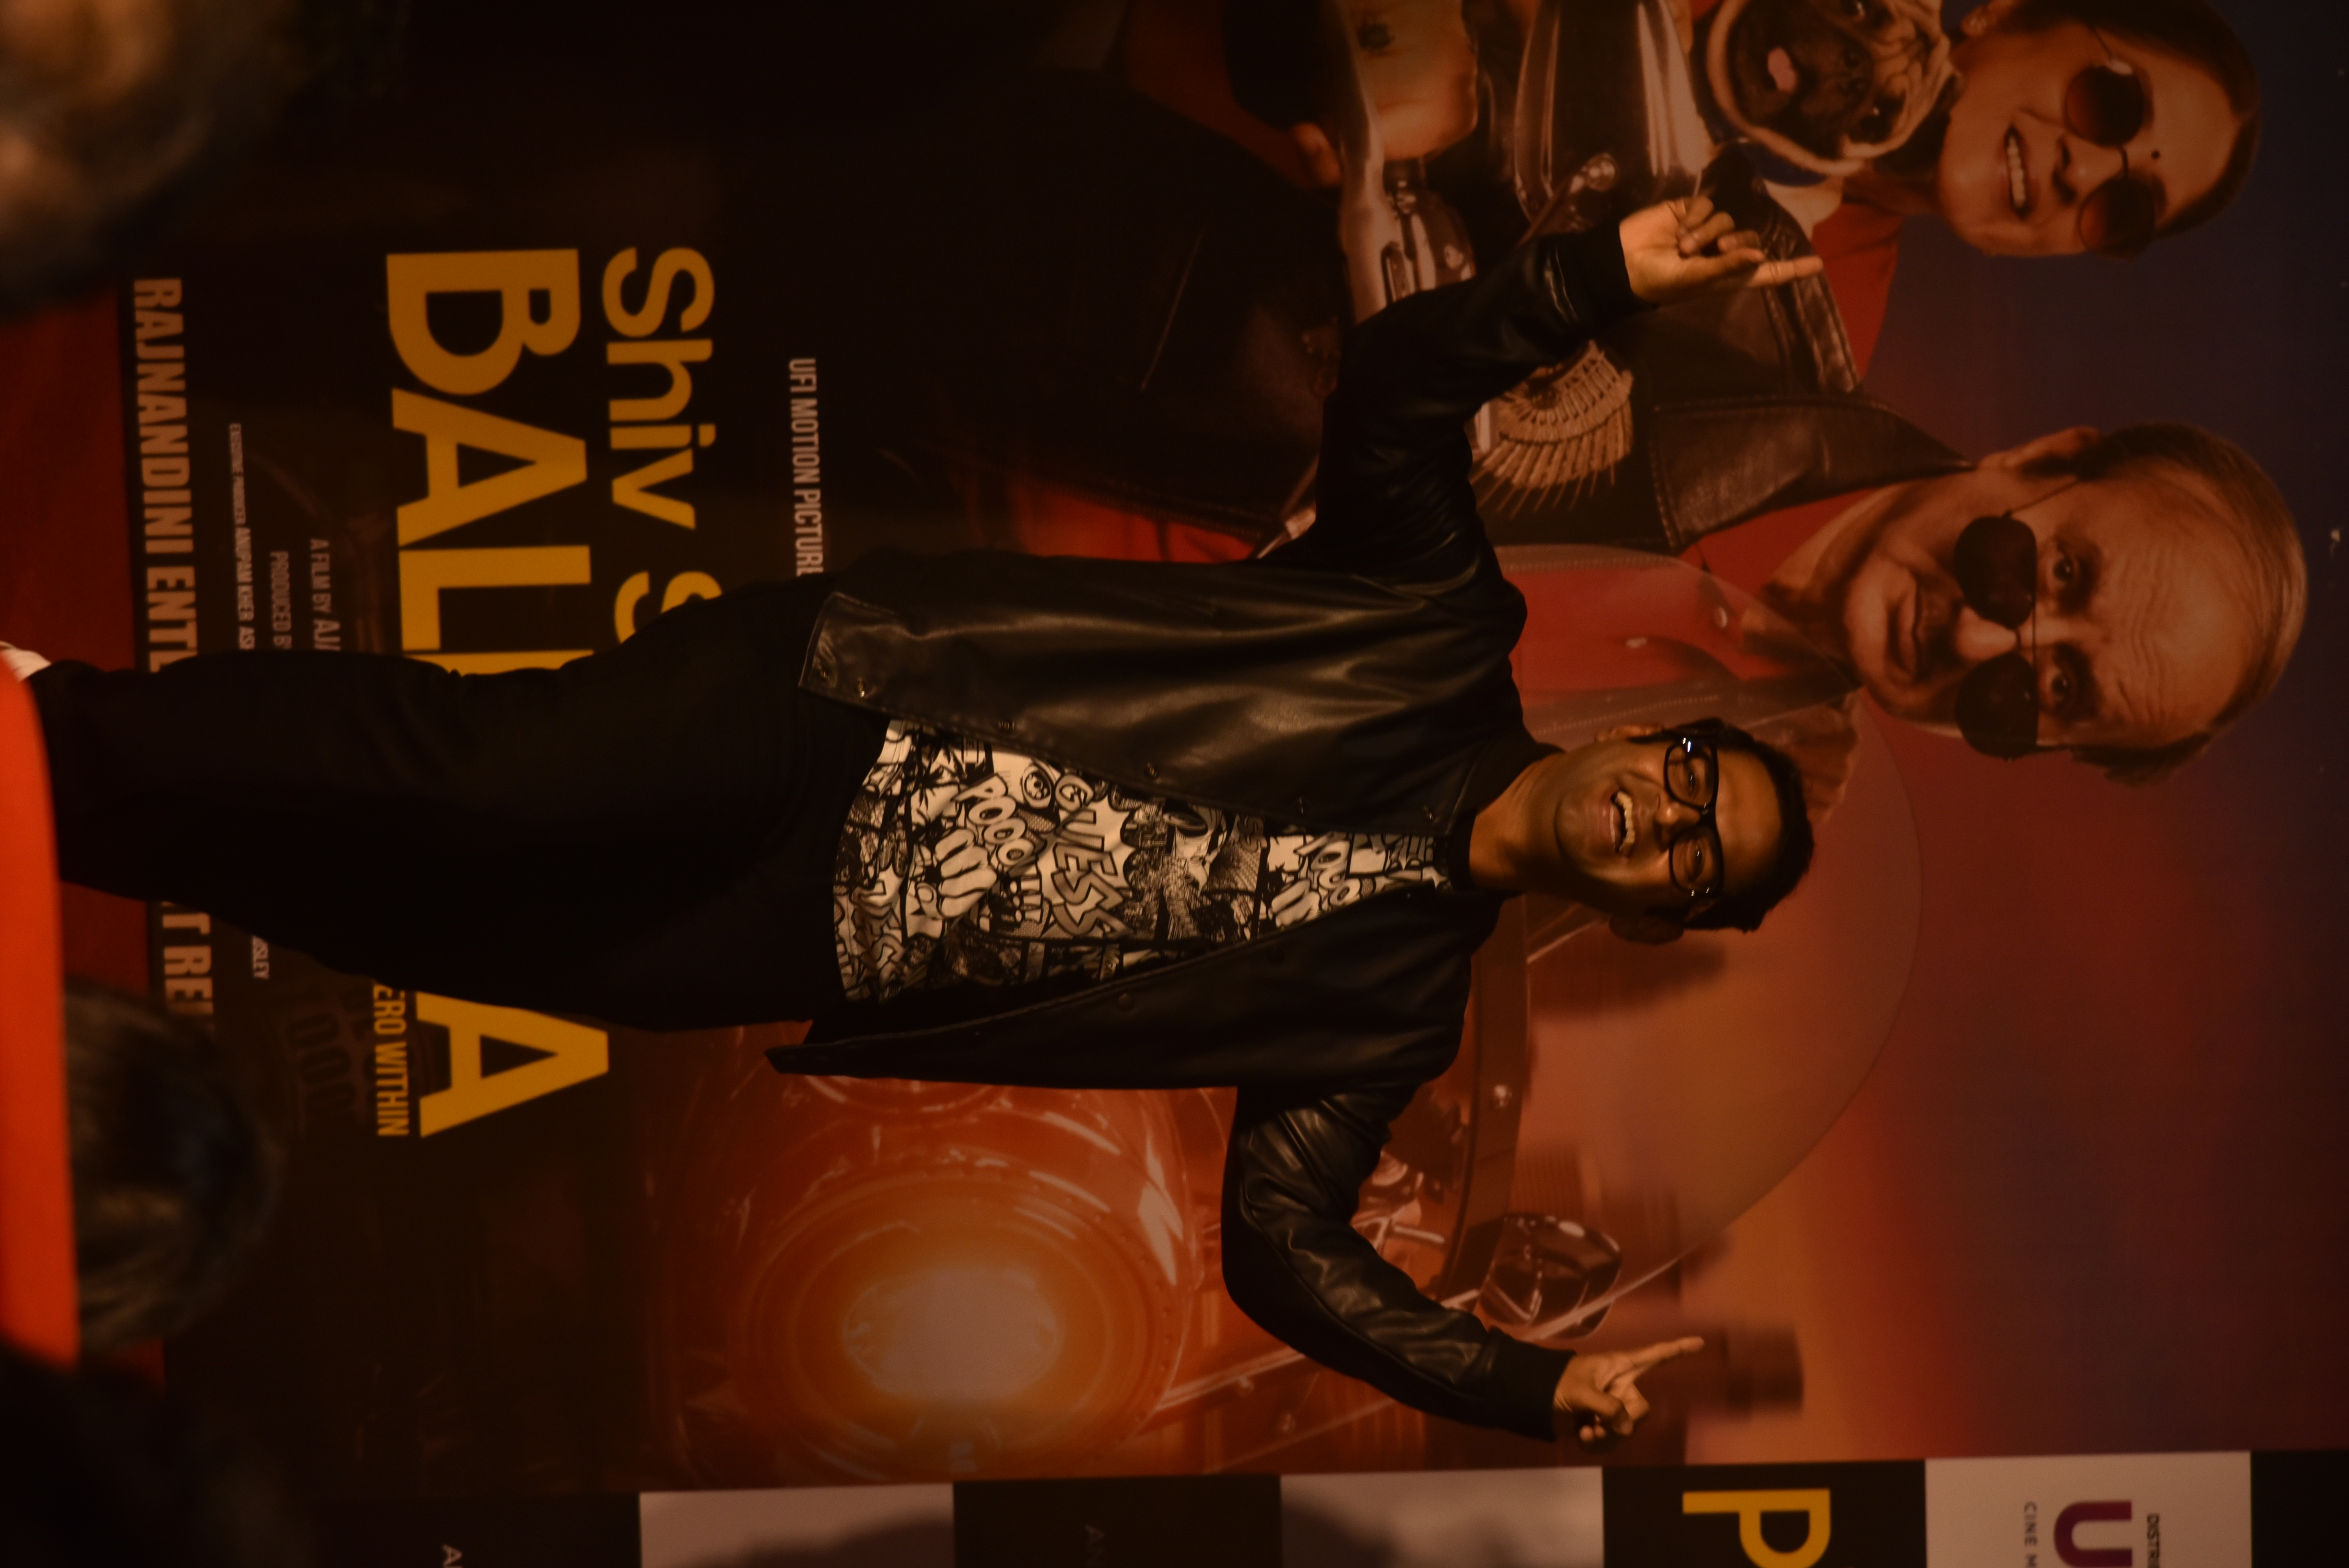 Shiv Shastri Balboa releases in cinemas on Feb 10